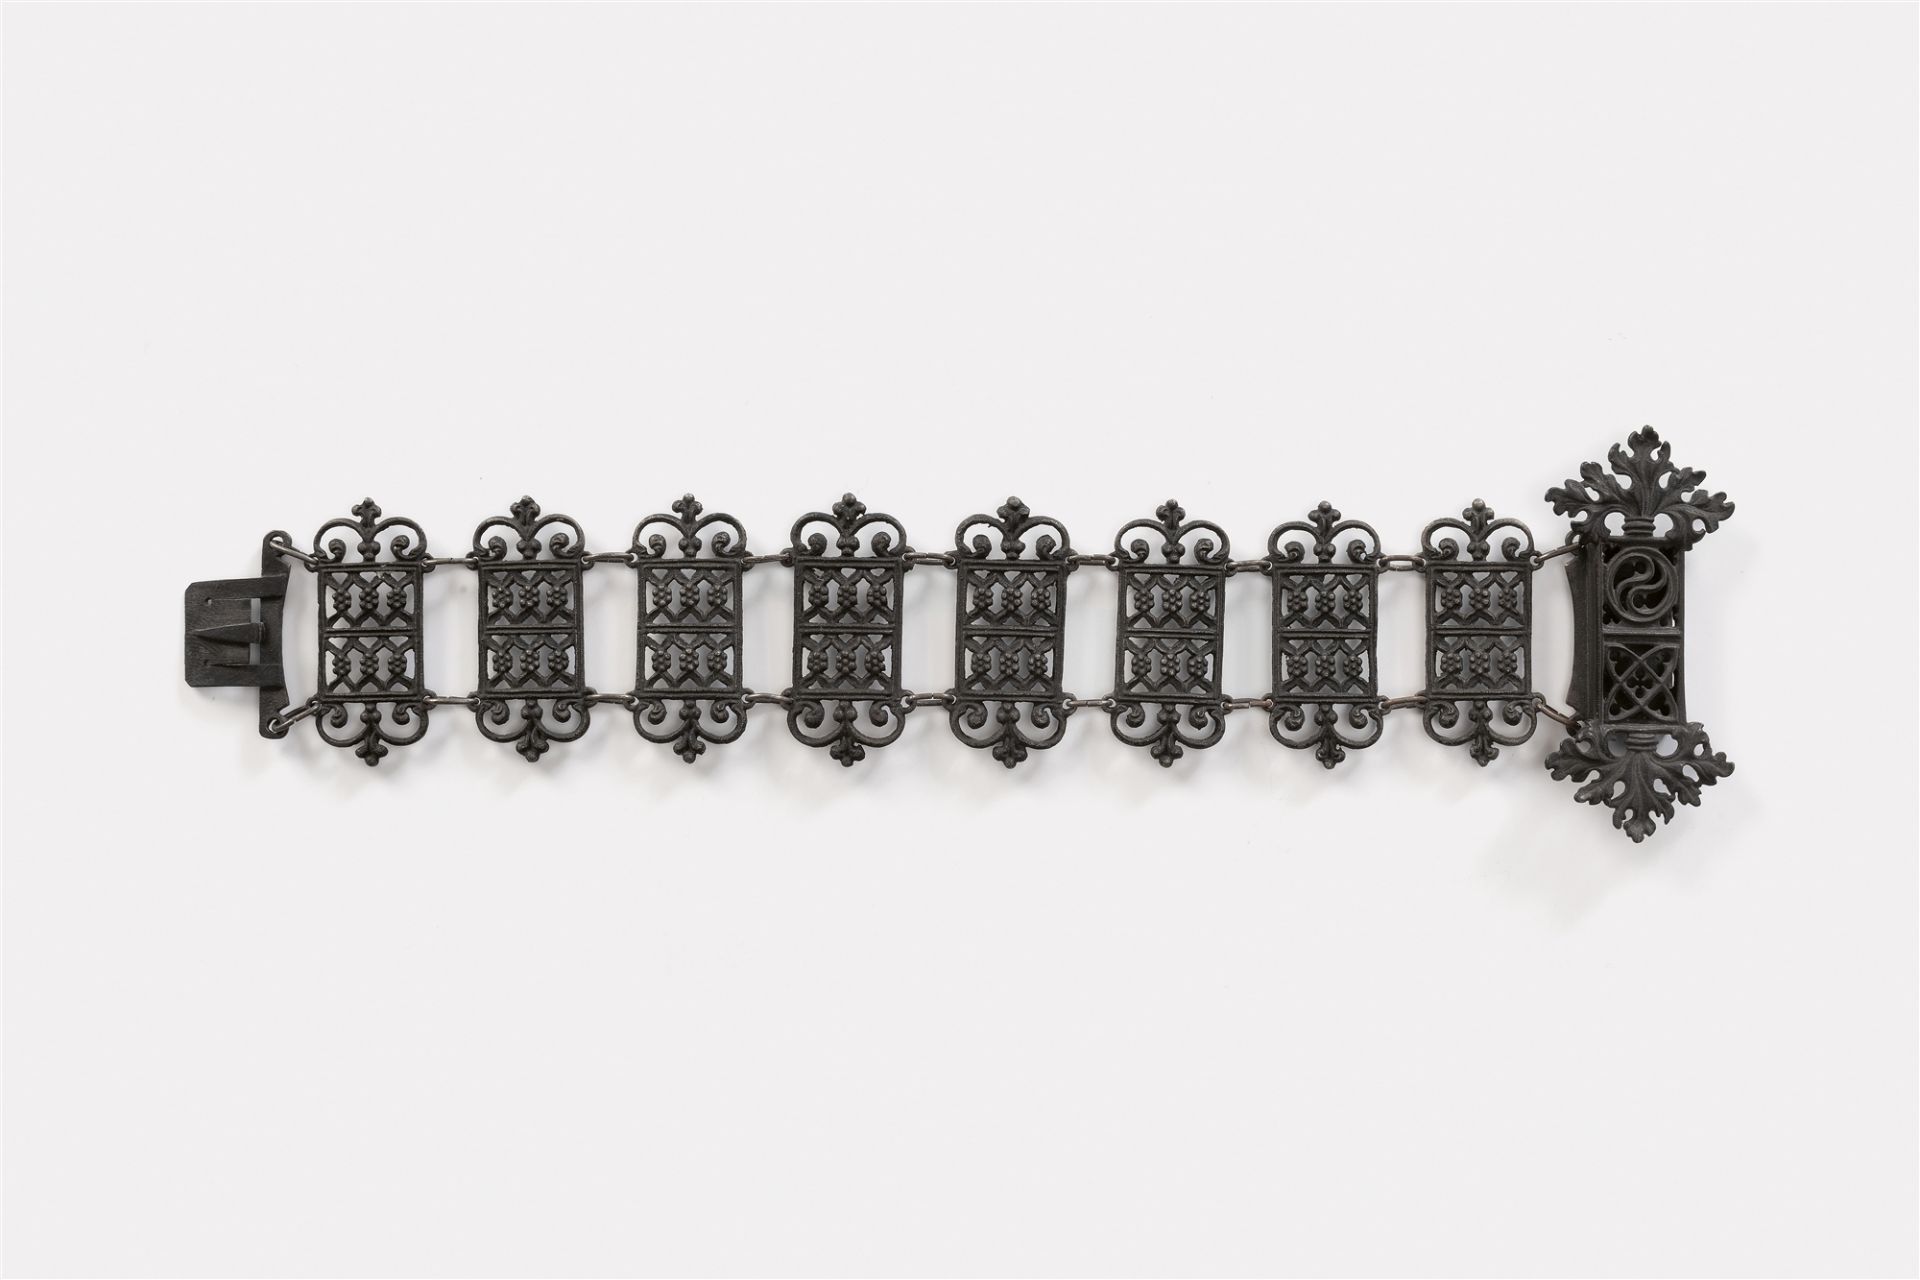 A cast iron bracelet